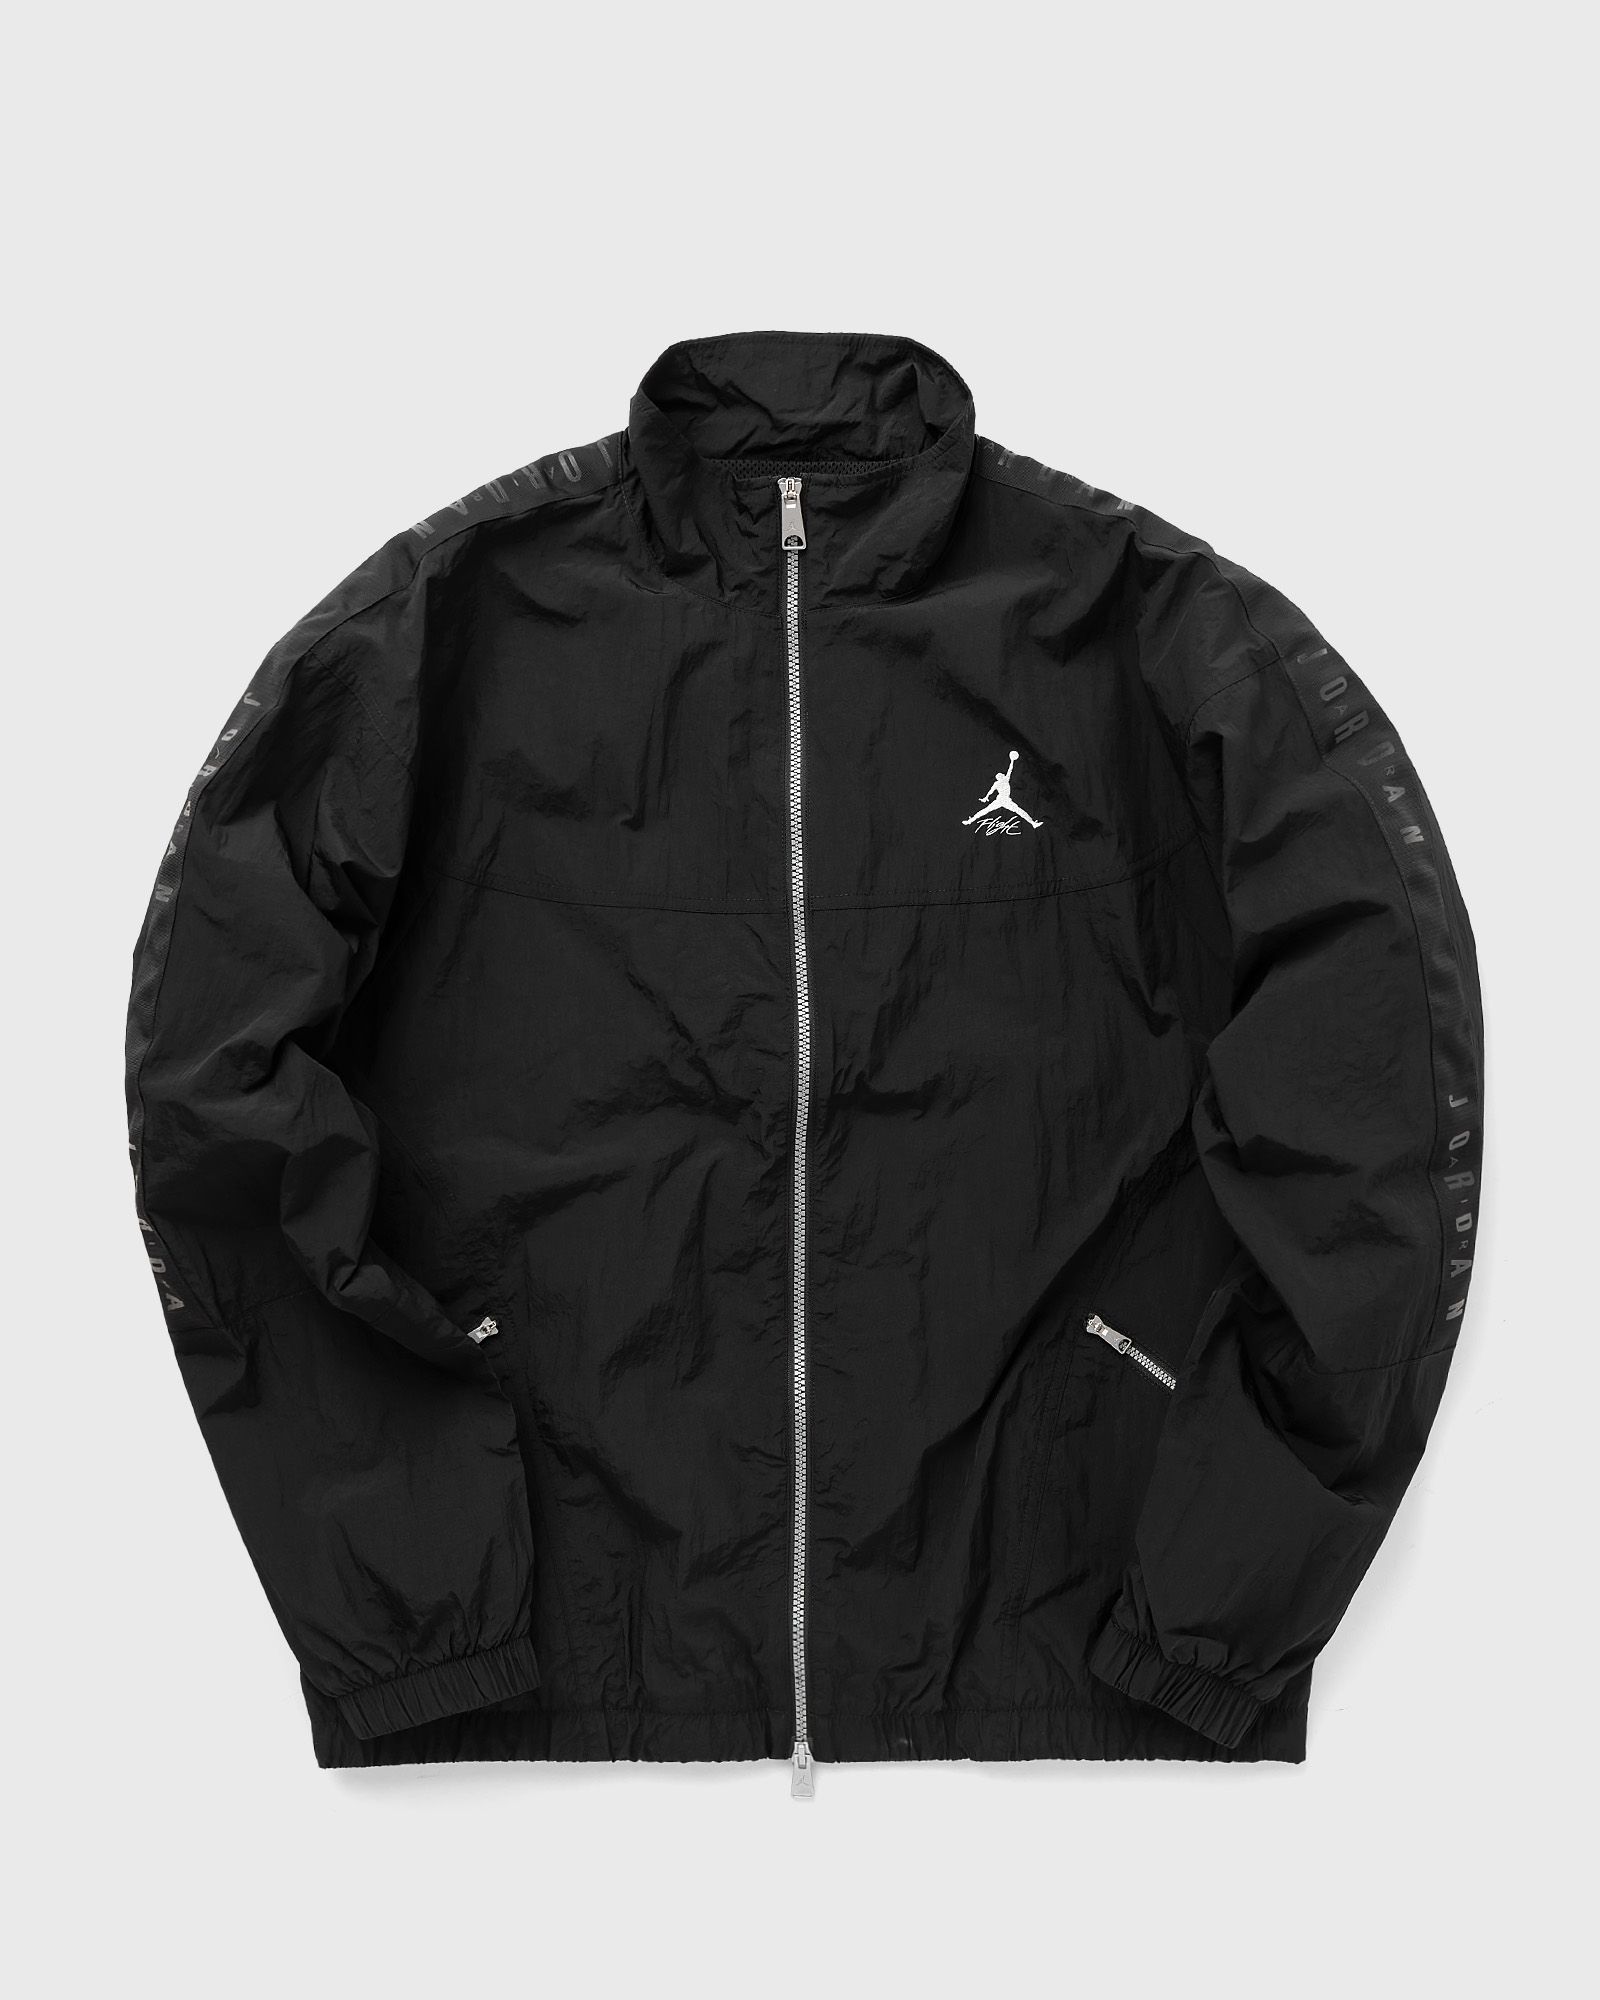 Jordan - essentials warmup-jacket men windbreaker black in größe:xl